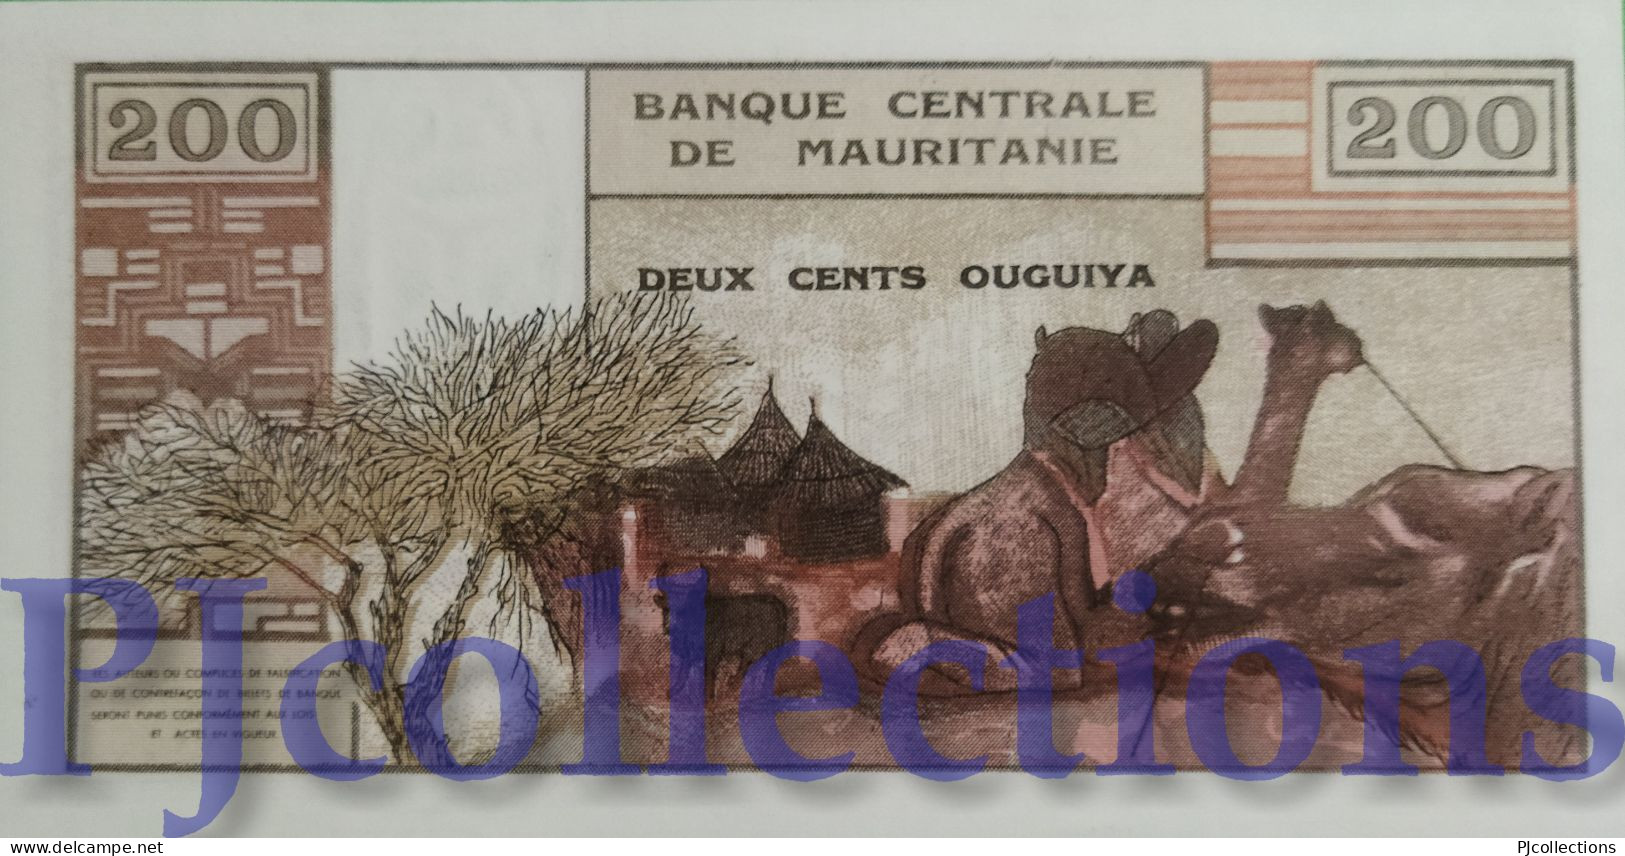 MAURITANIA 200 OUGUIYA 1973 PICK 2a UNC - Mauritanie